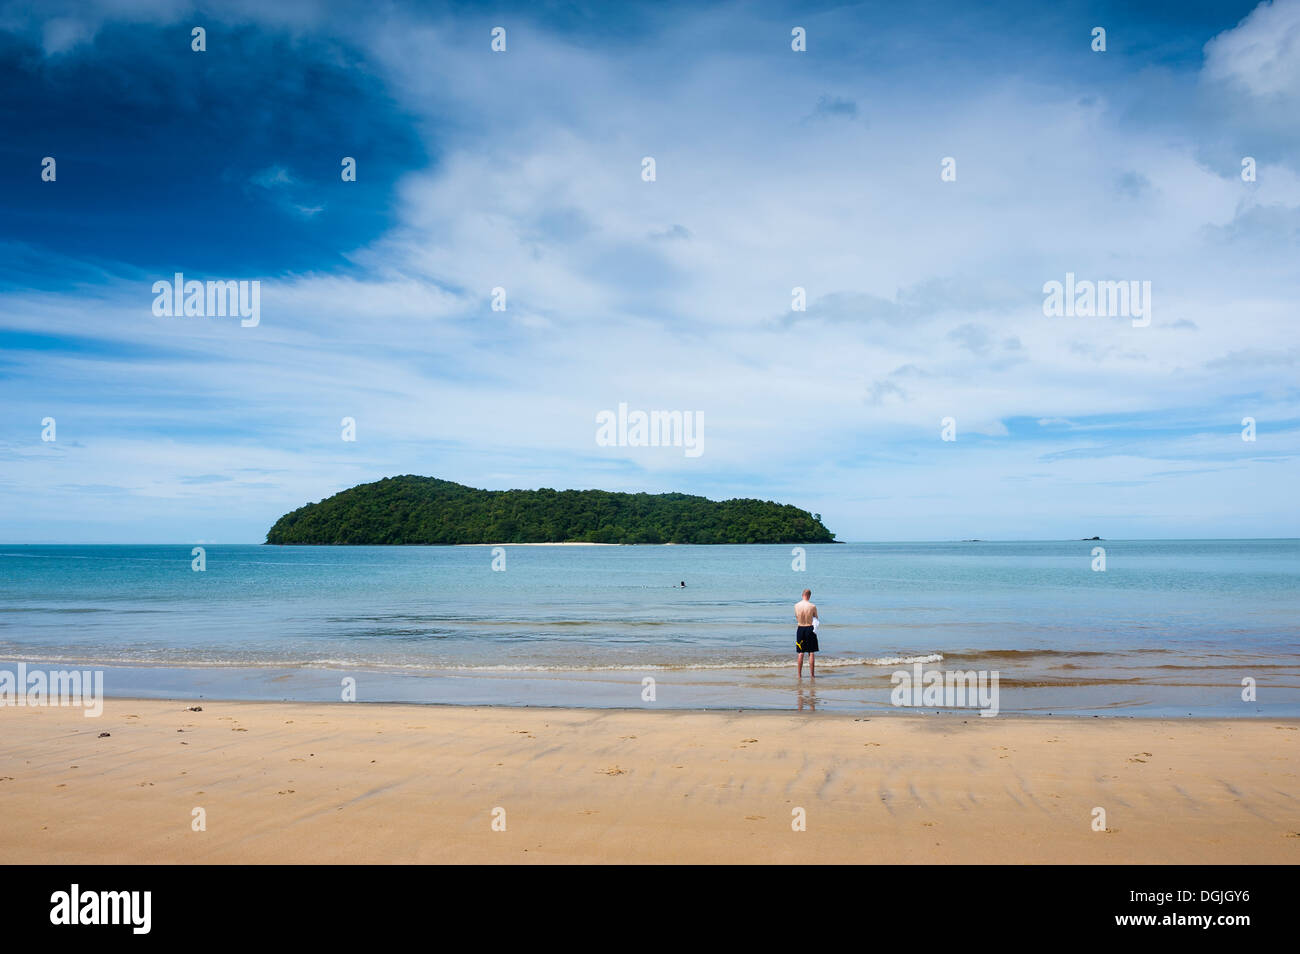 A tourist standing on Pantai tengah beach in Langkawi. Stock Photo